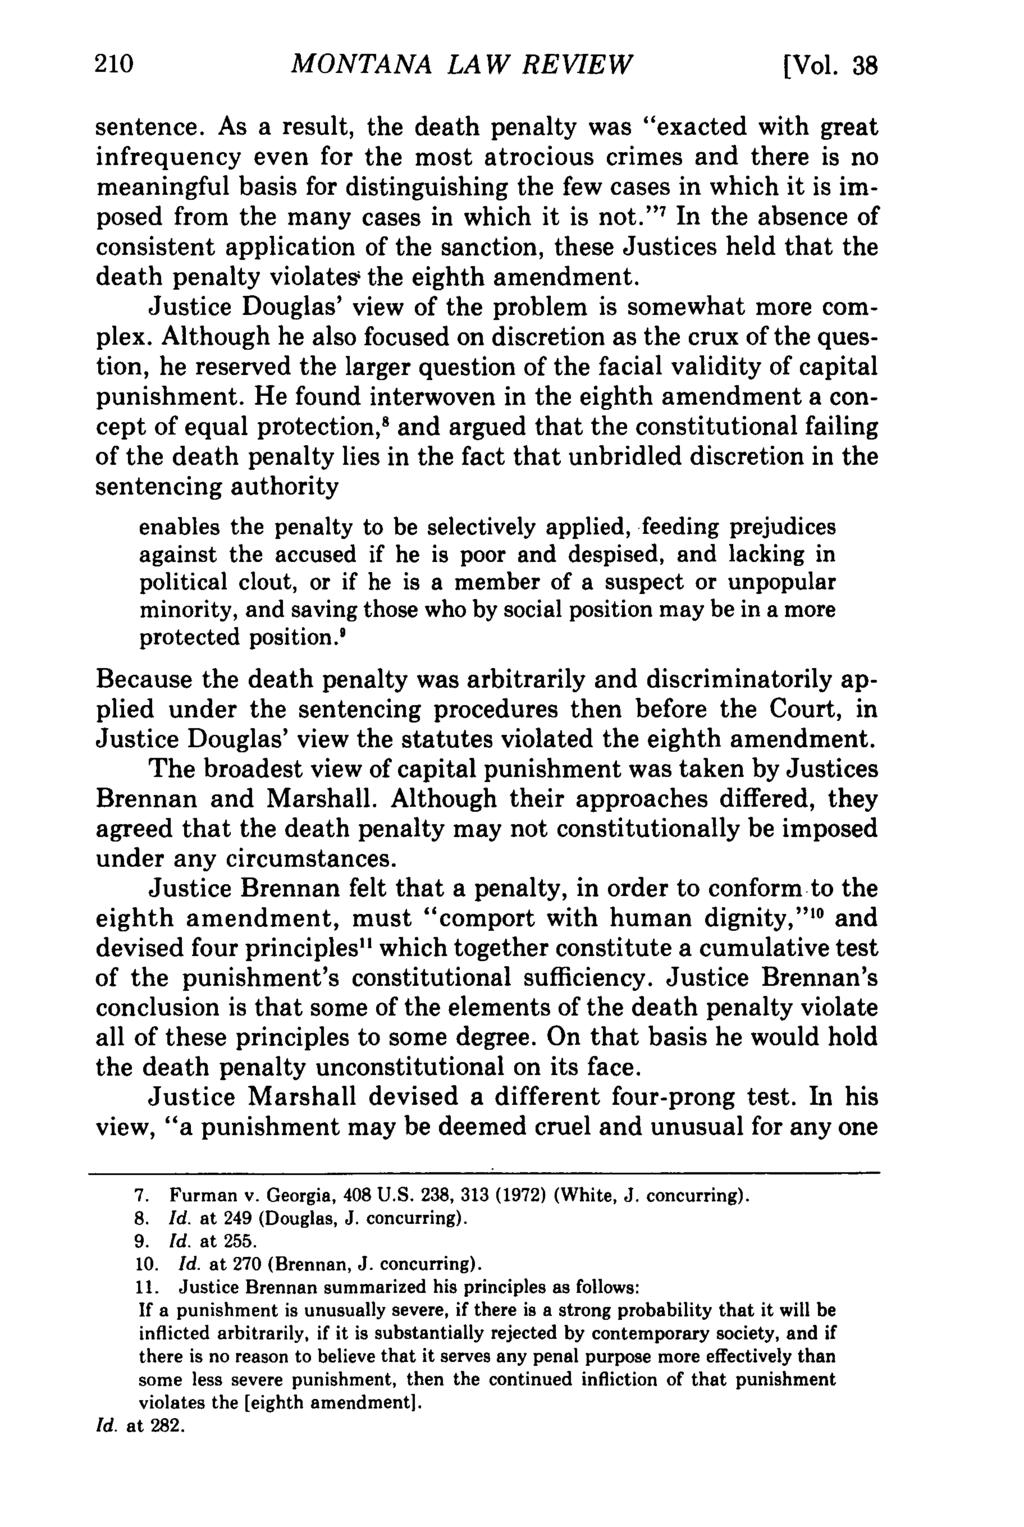 MONTANA Montana Law Review, LAW Vol. REVIEW 38 [1977], Iss. 1, Art. 7 [Vol. 38 sentence.